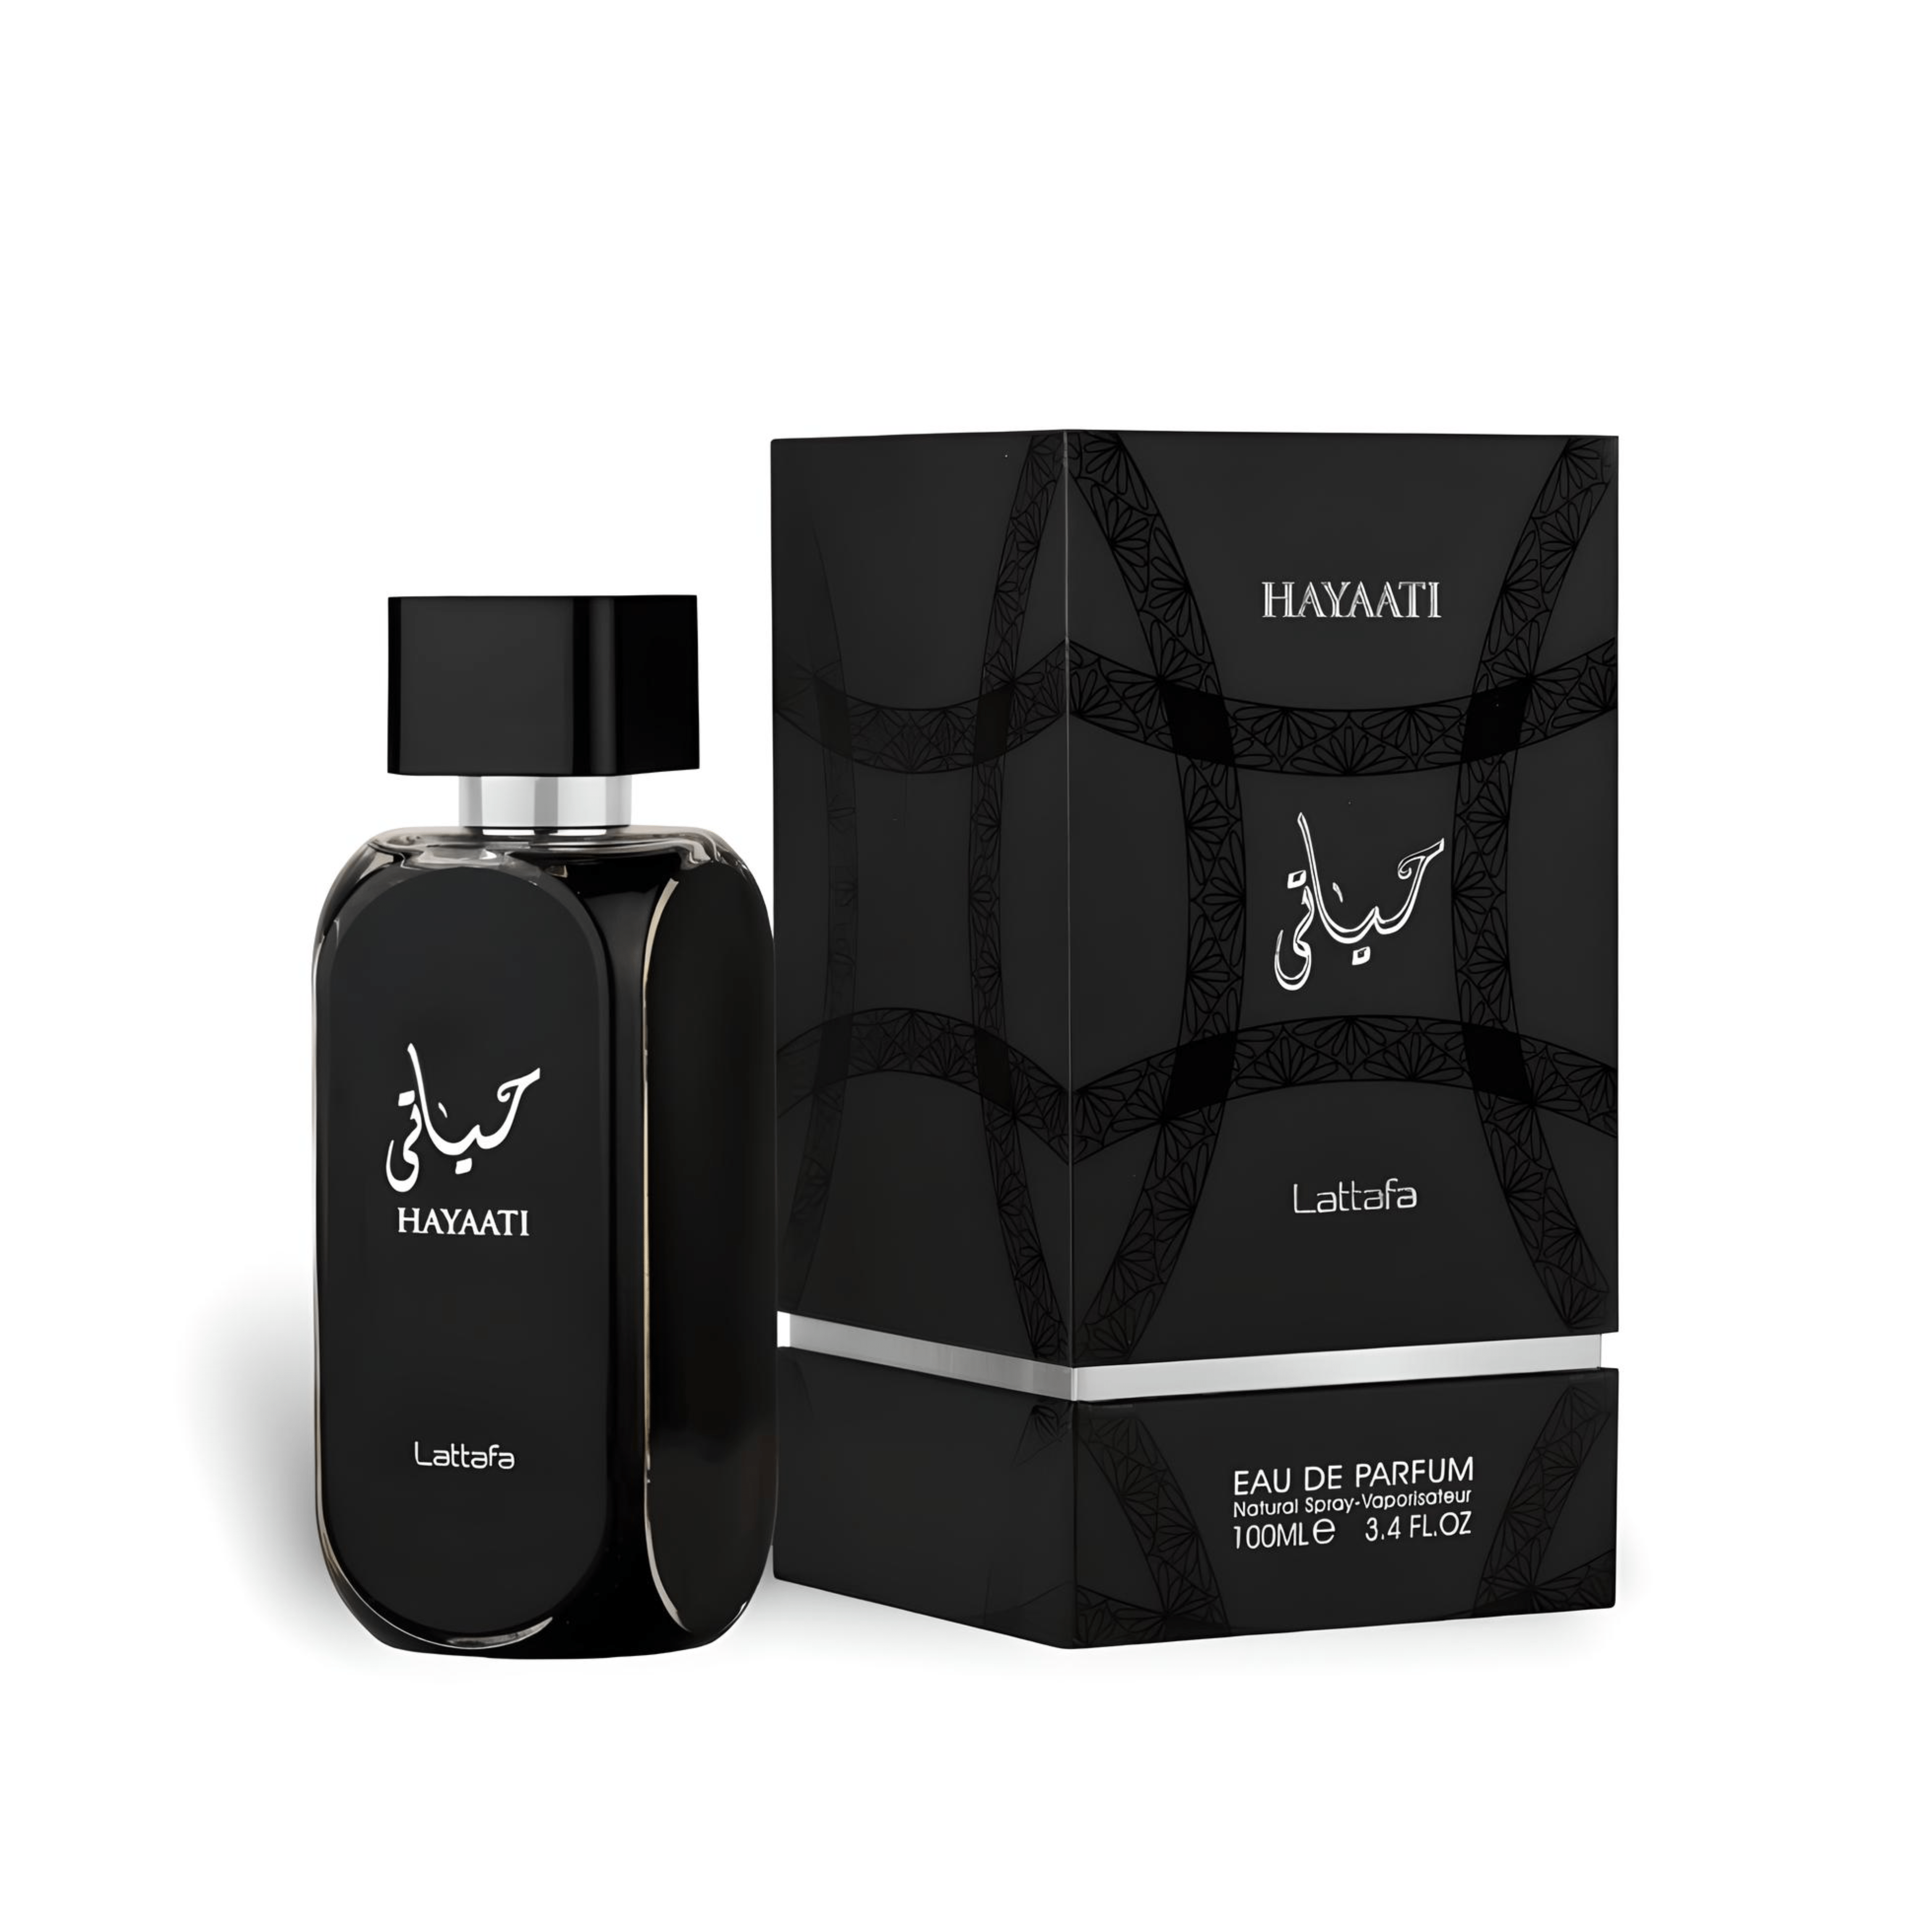 Hayaati Perfume / Eau De Parfum 100Ml By Lattafa